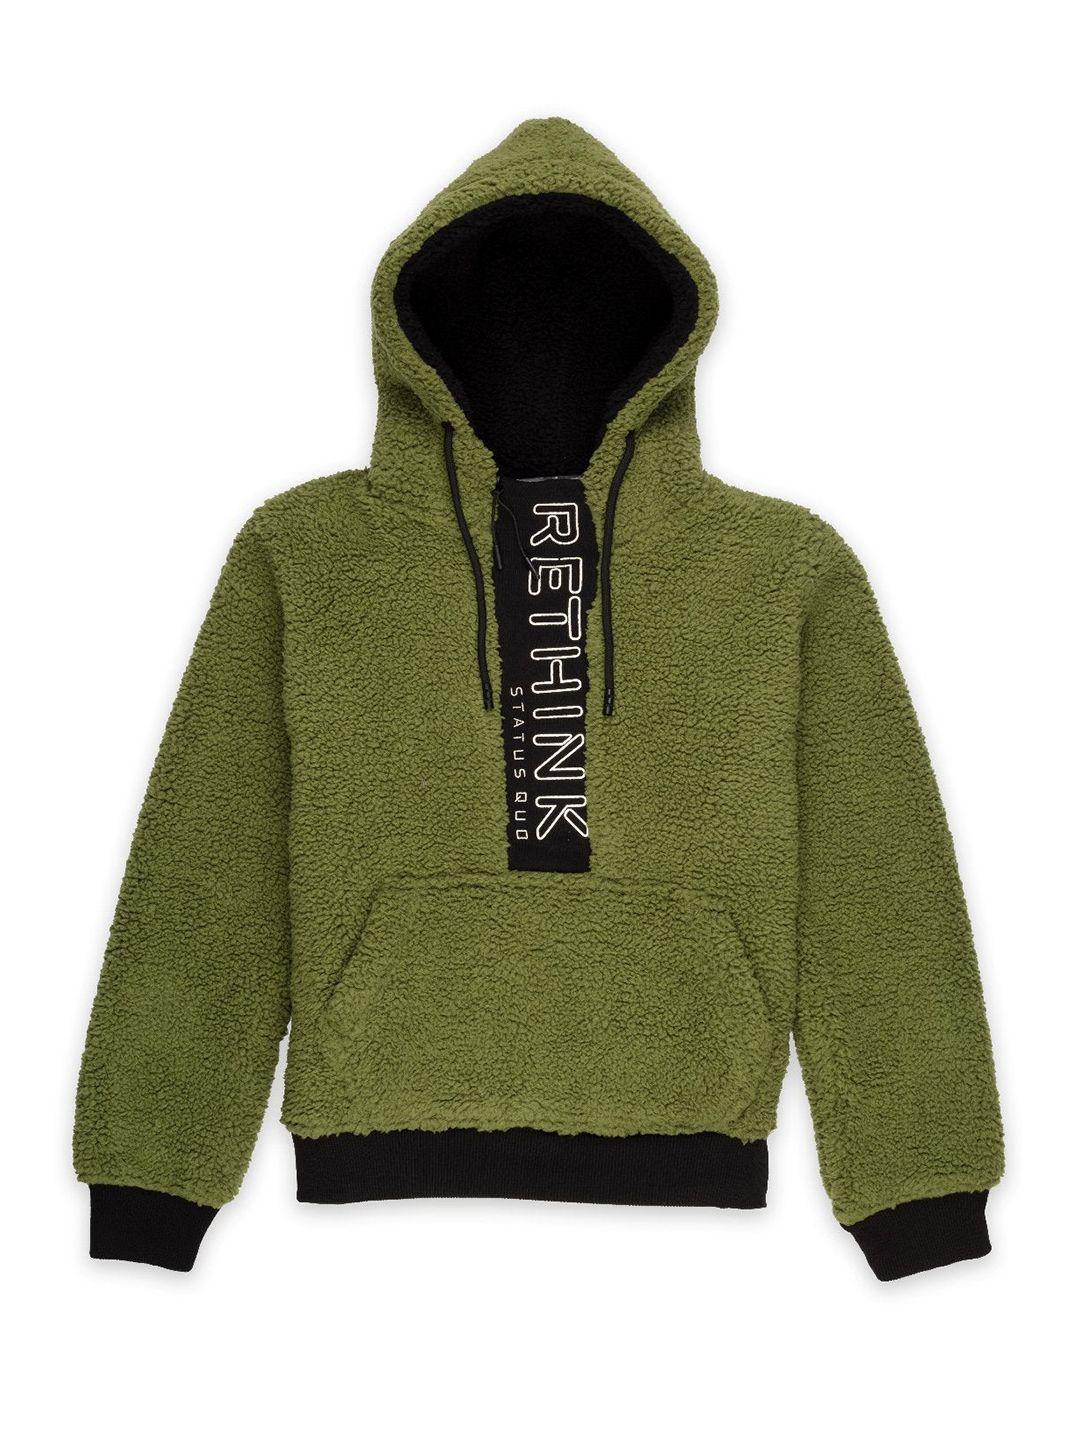 status quo boys olive green printed hooded cotton sweatshirt